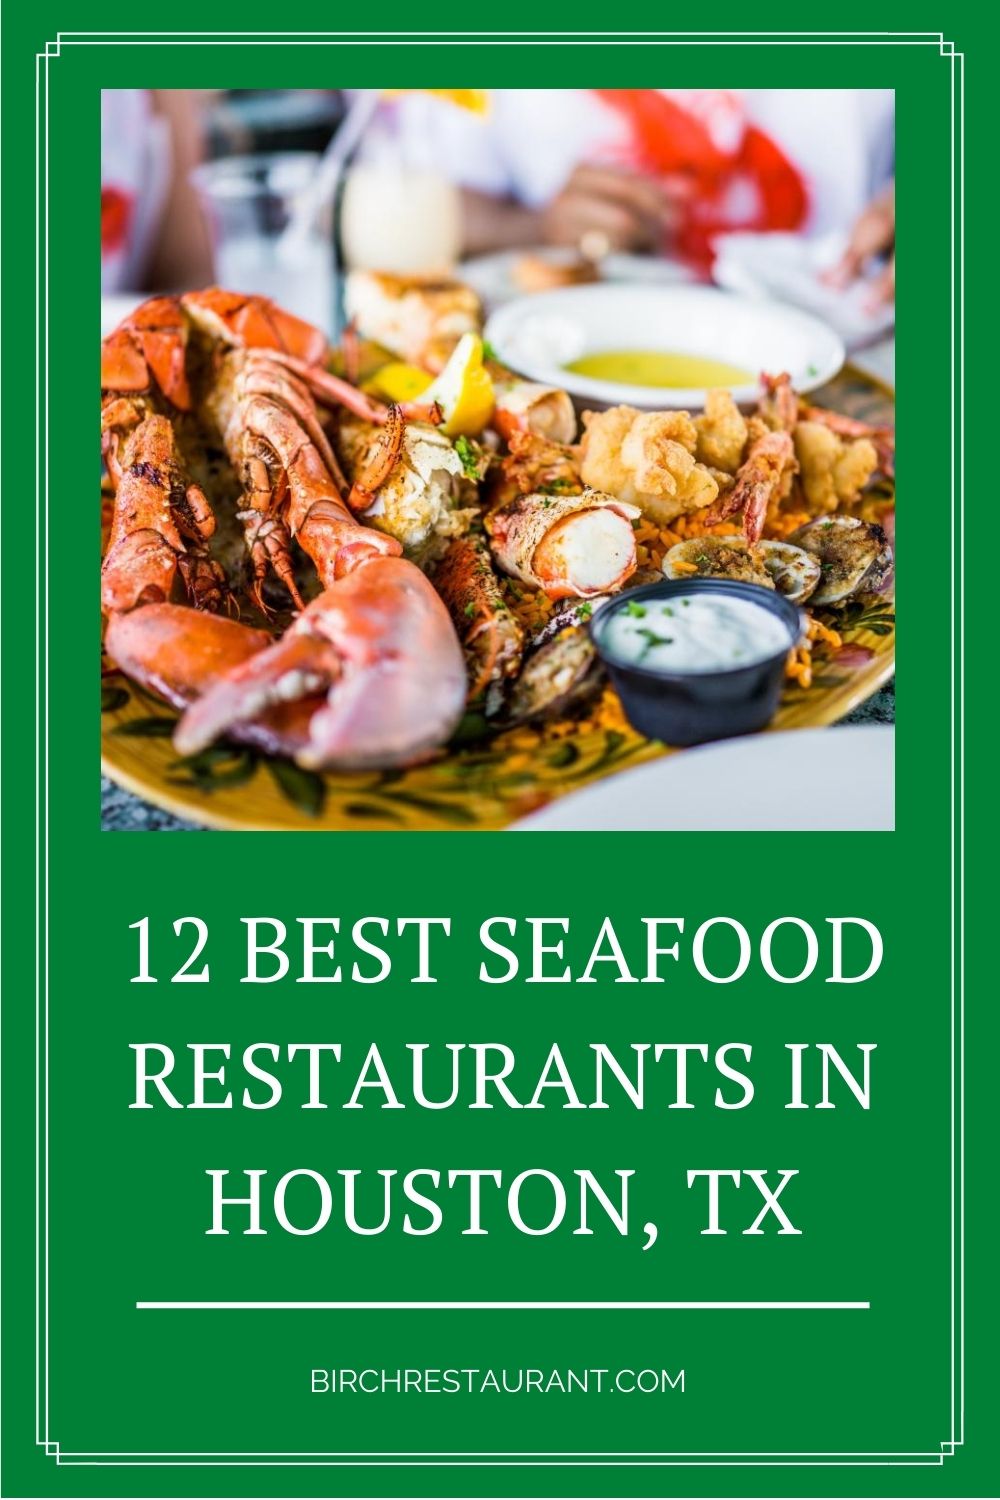 Best Seafood Restaurants in Houston, TX